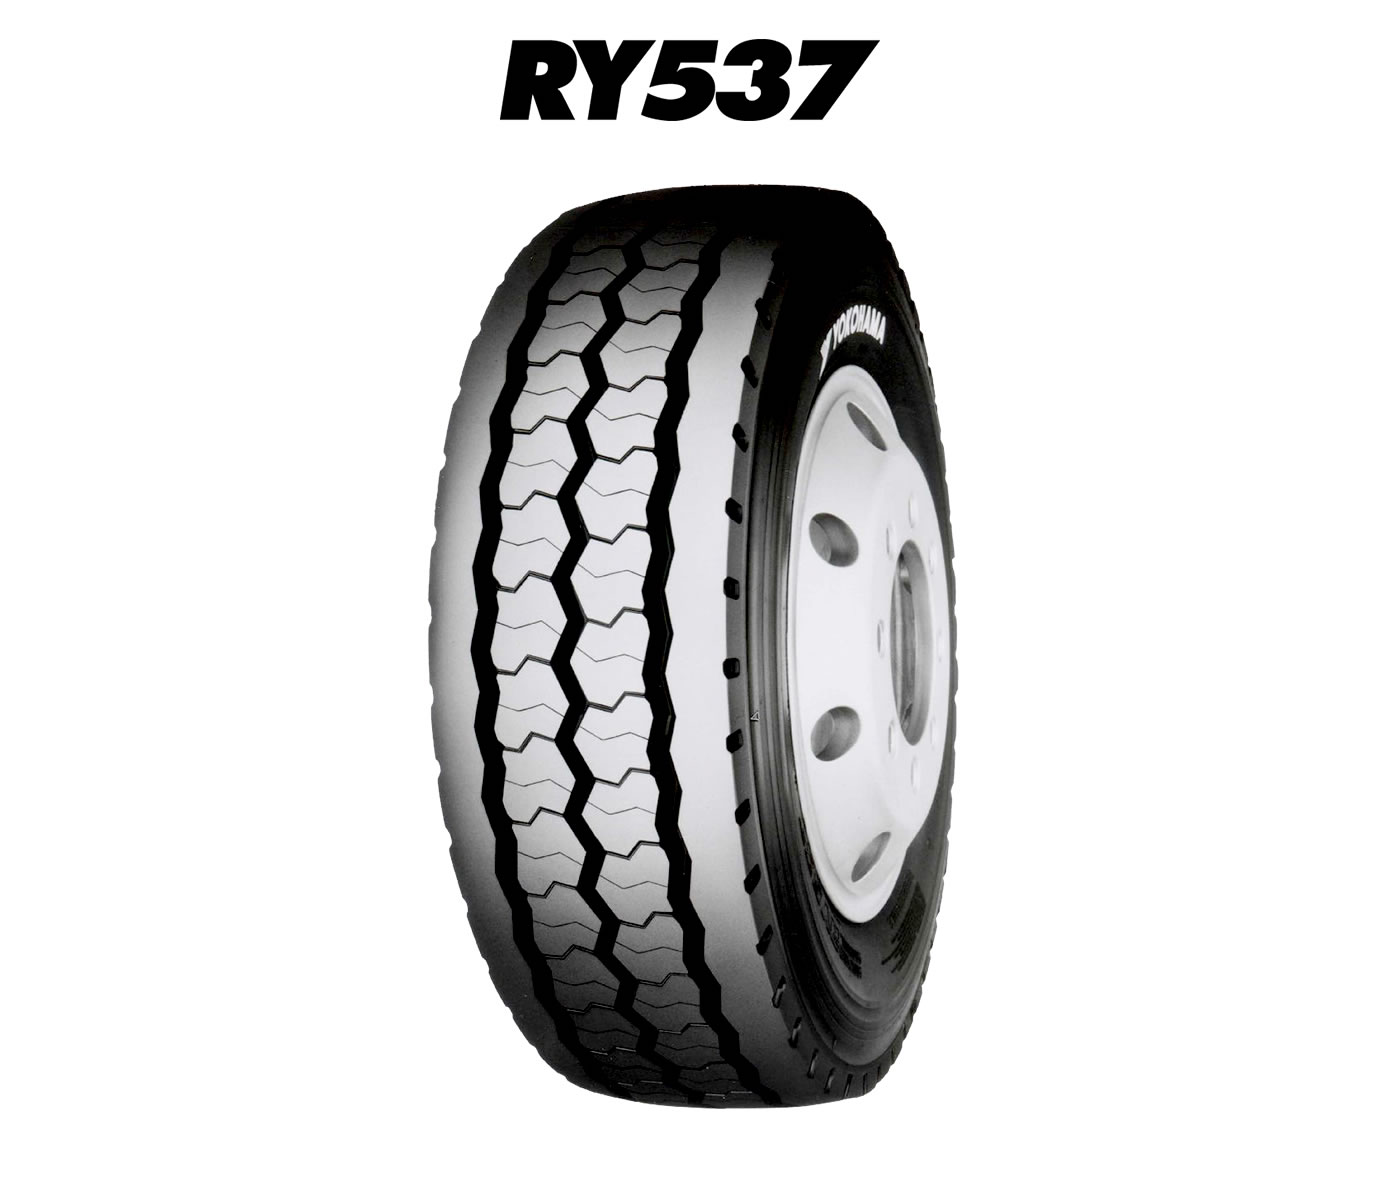 RY537